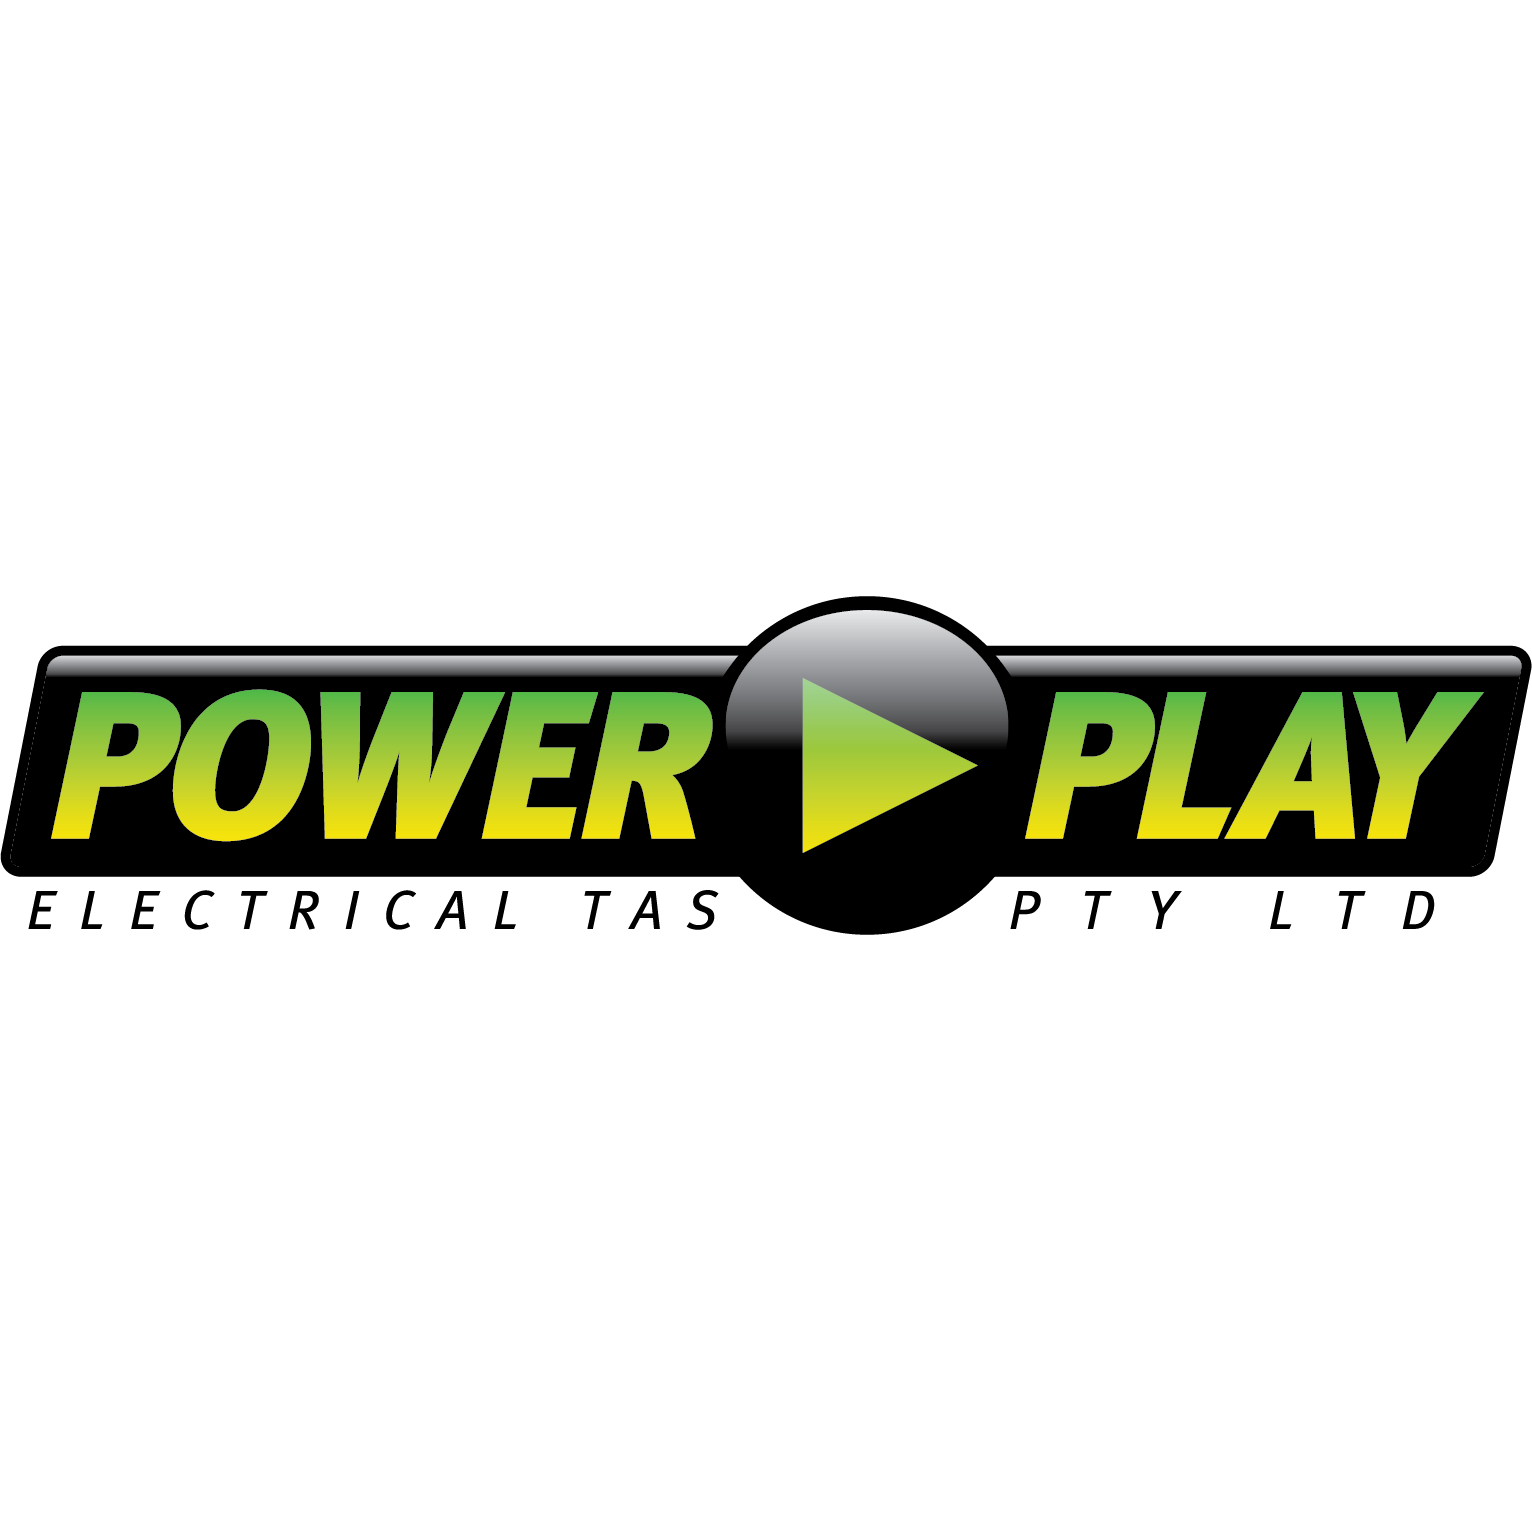 Power Play Electrical Tas Pty Ltd - Cambridge, TAS 7170 - (03) 6248 4999 | ShowMeLocal.com